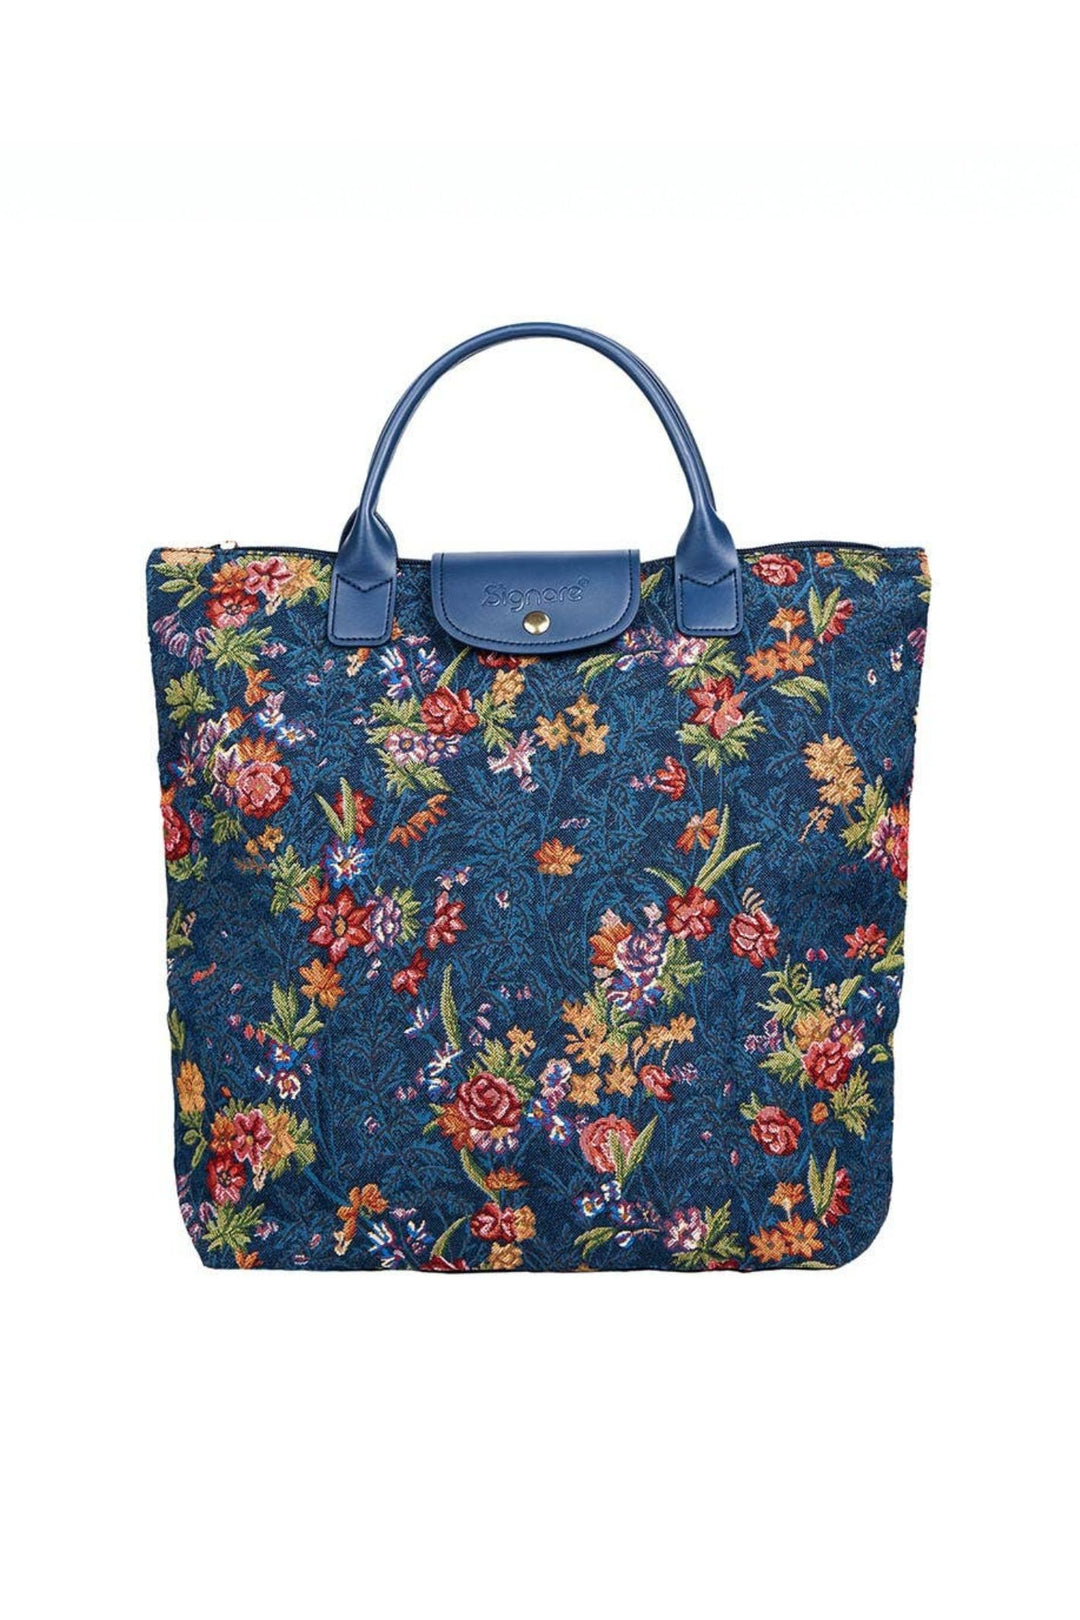 V&A Flower Meadow Blue Le Pliage Folding Tote Bag